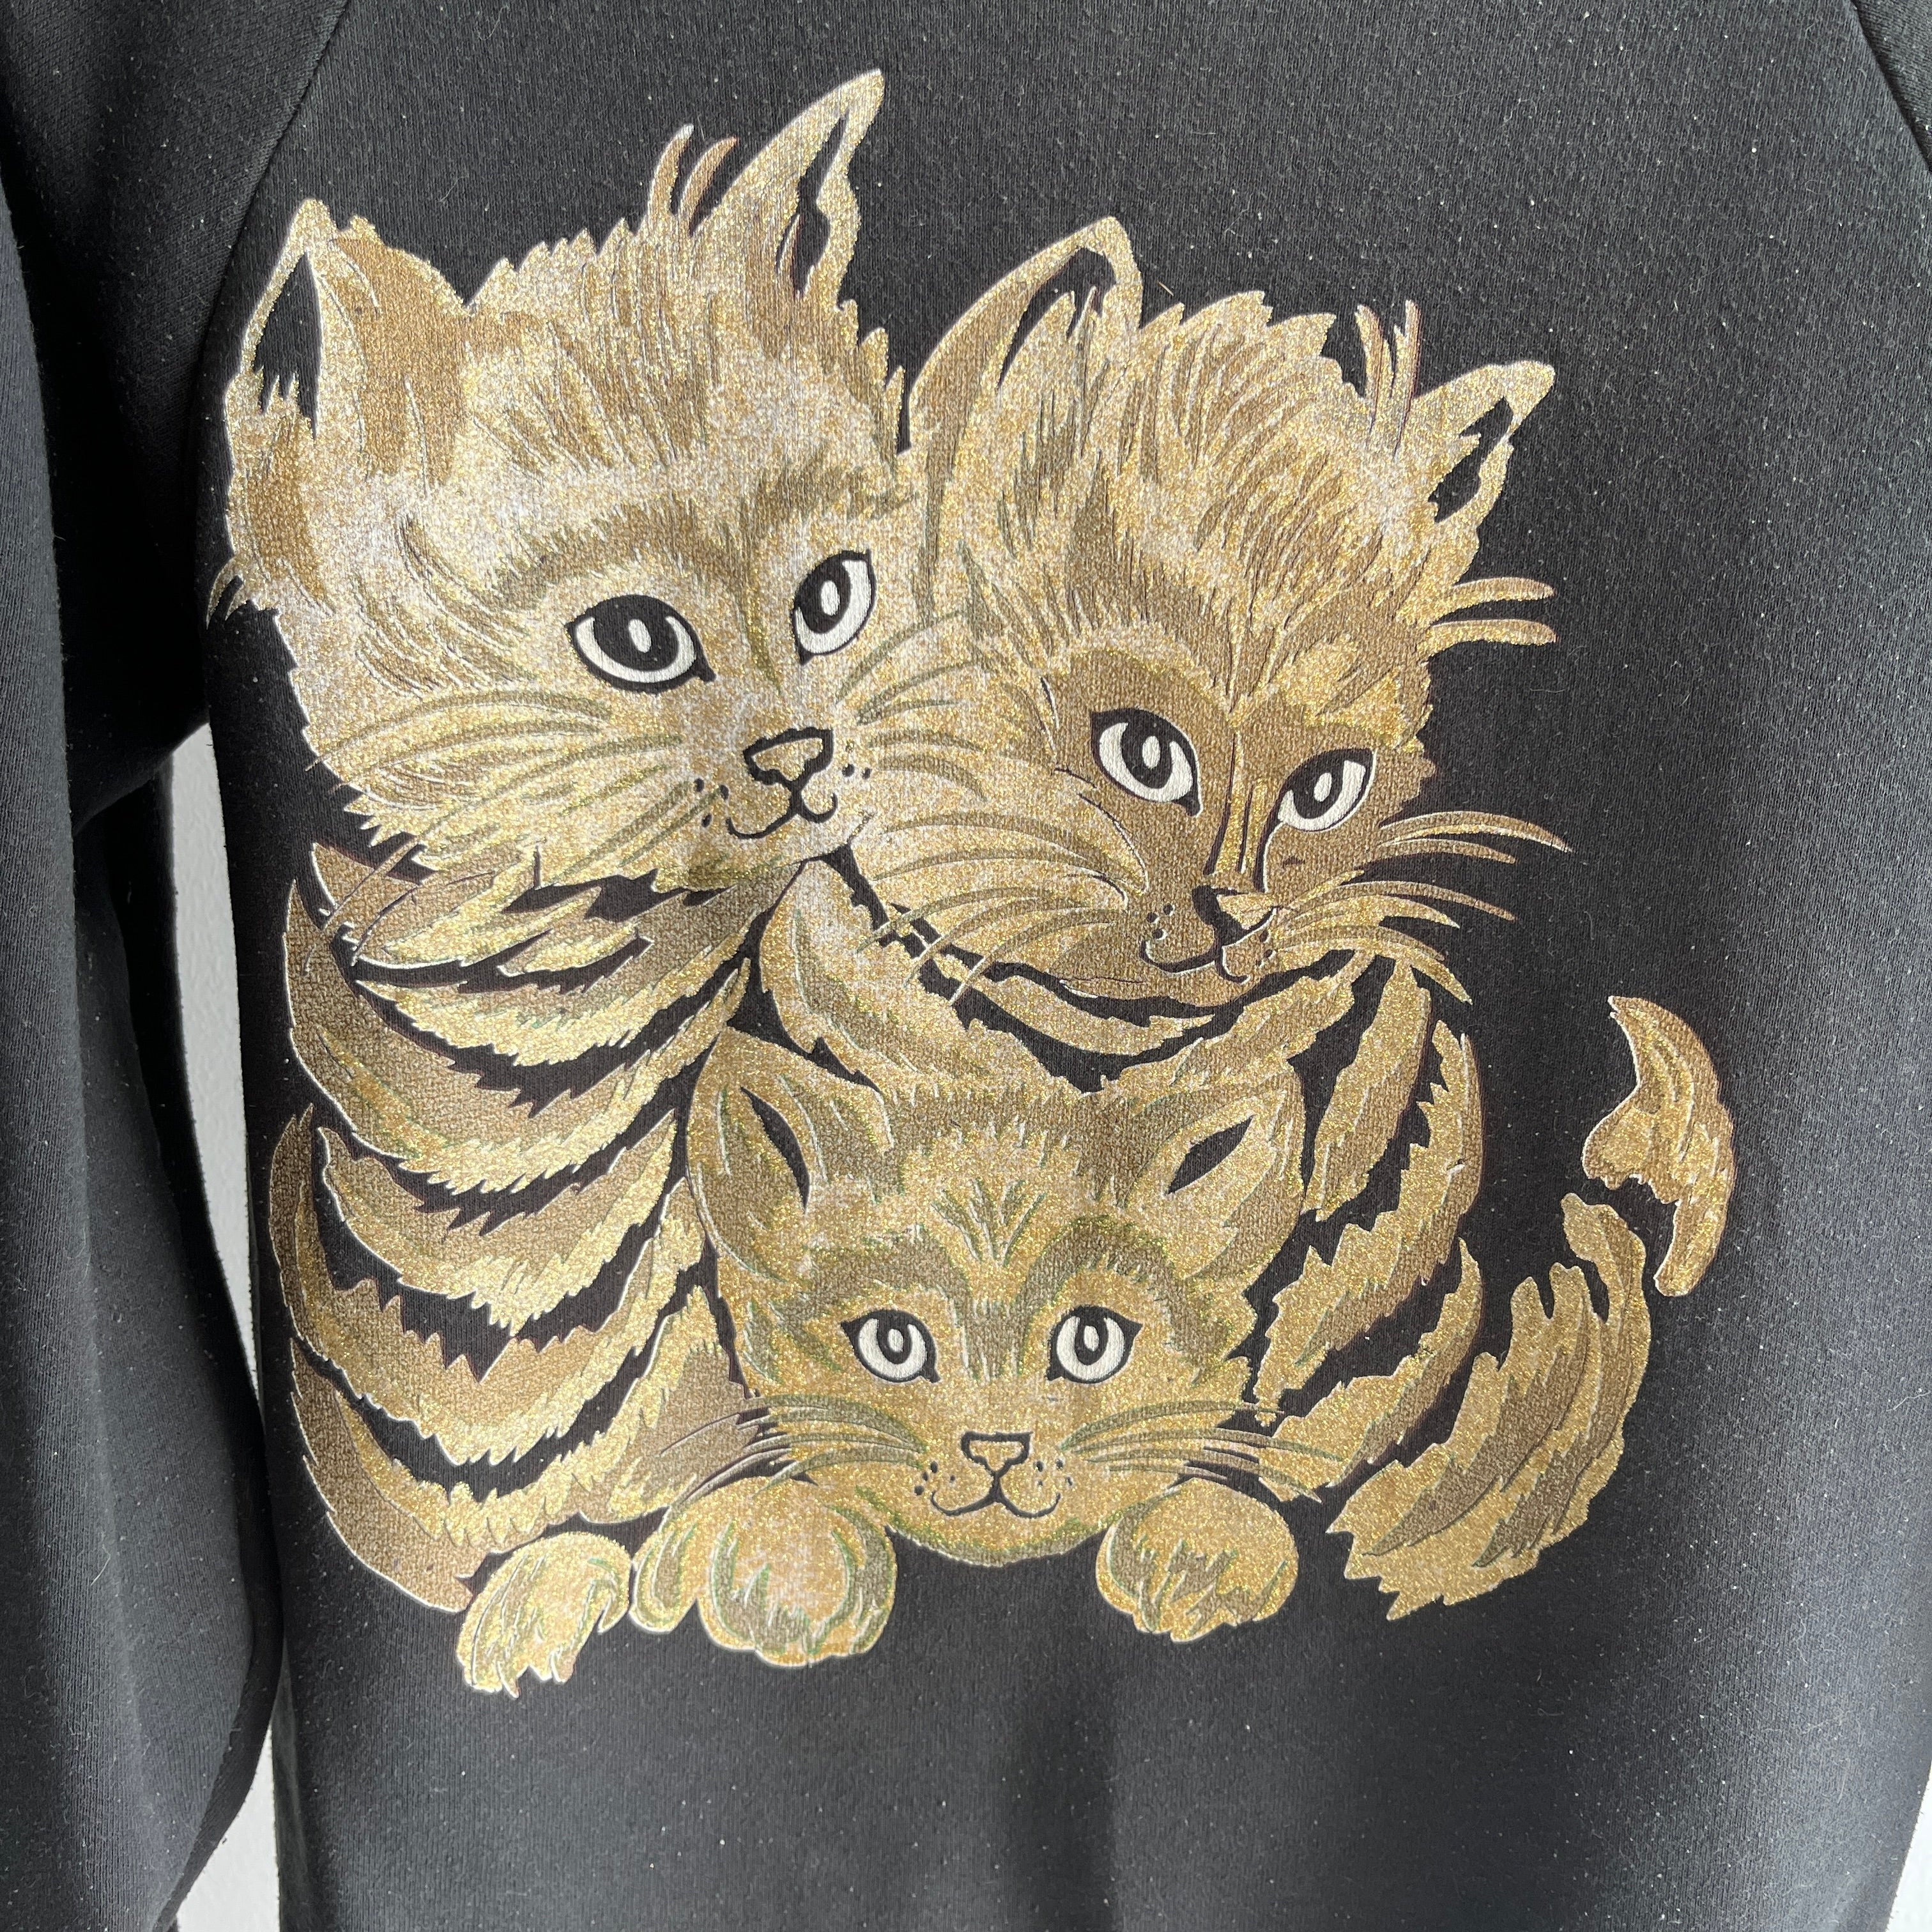 1980s Medium Weight Sparkly Cat Sweatshirt